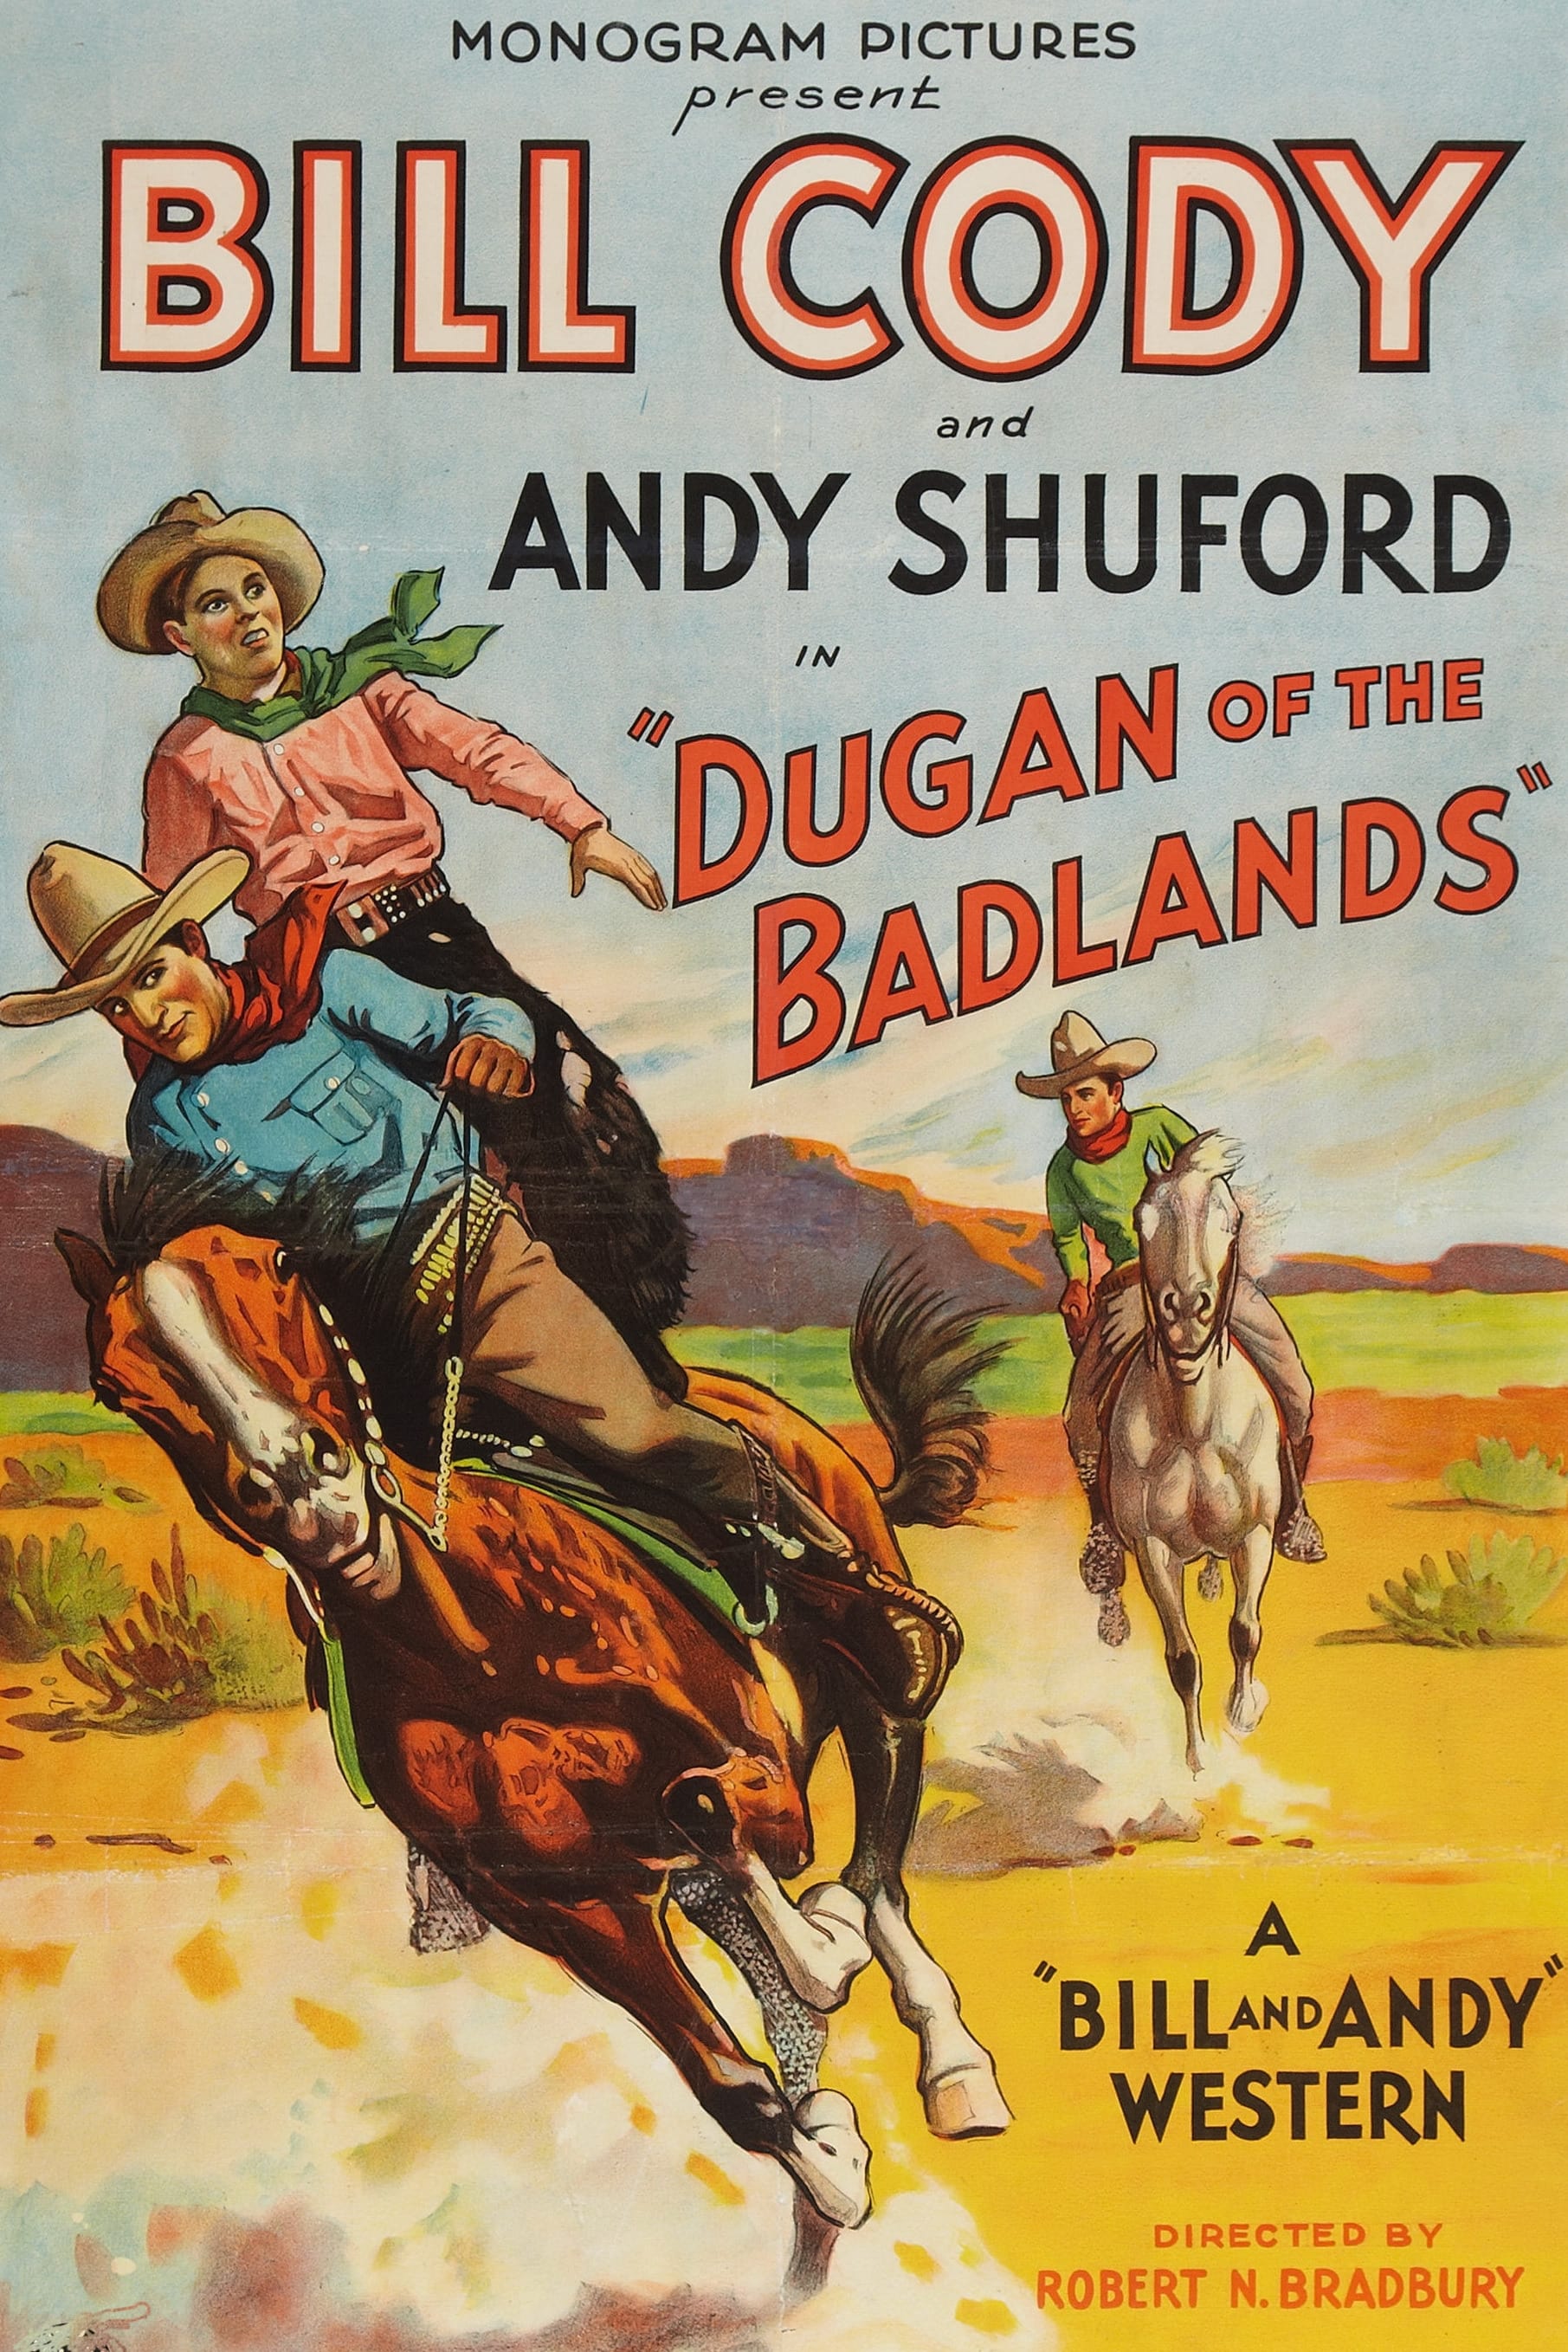 Dugan of the Badlands